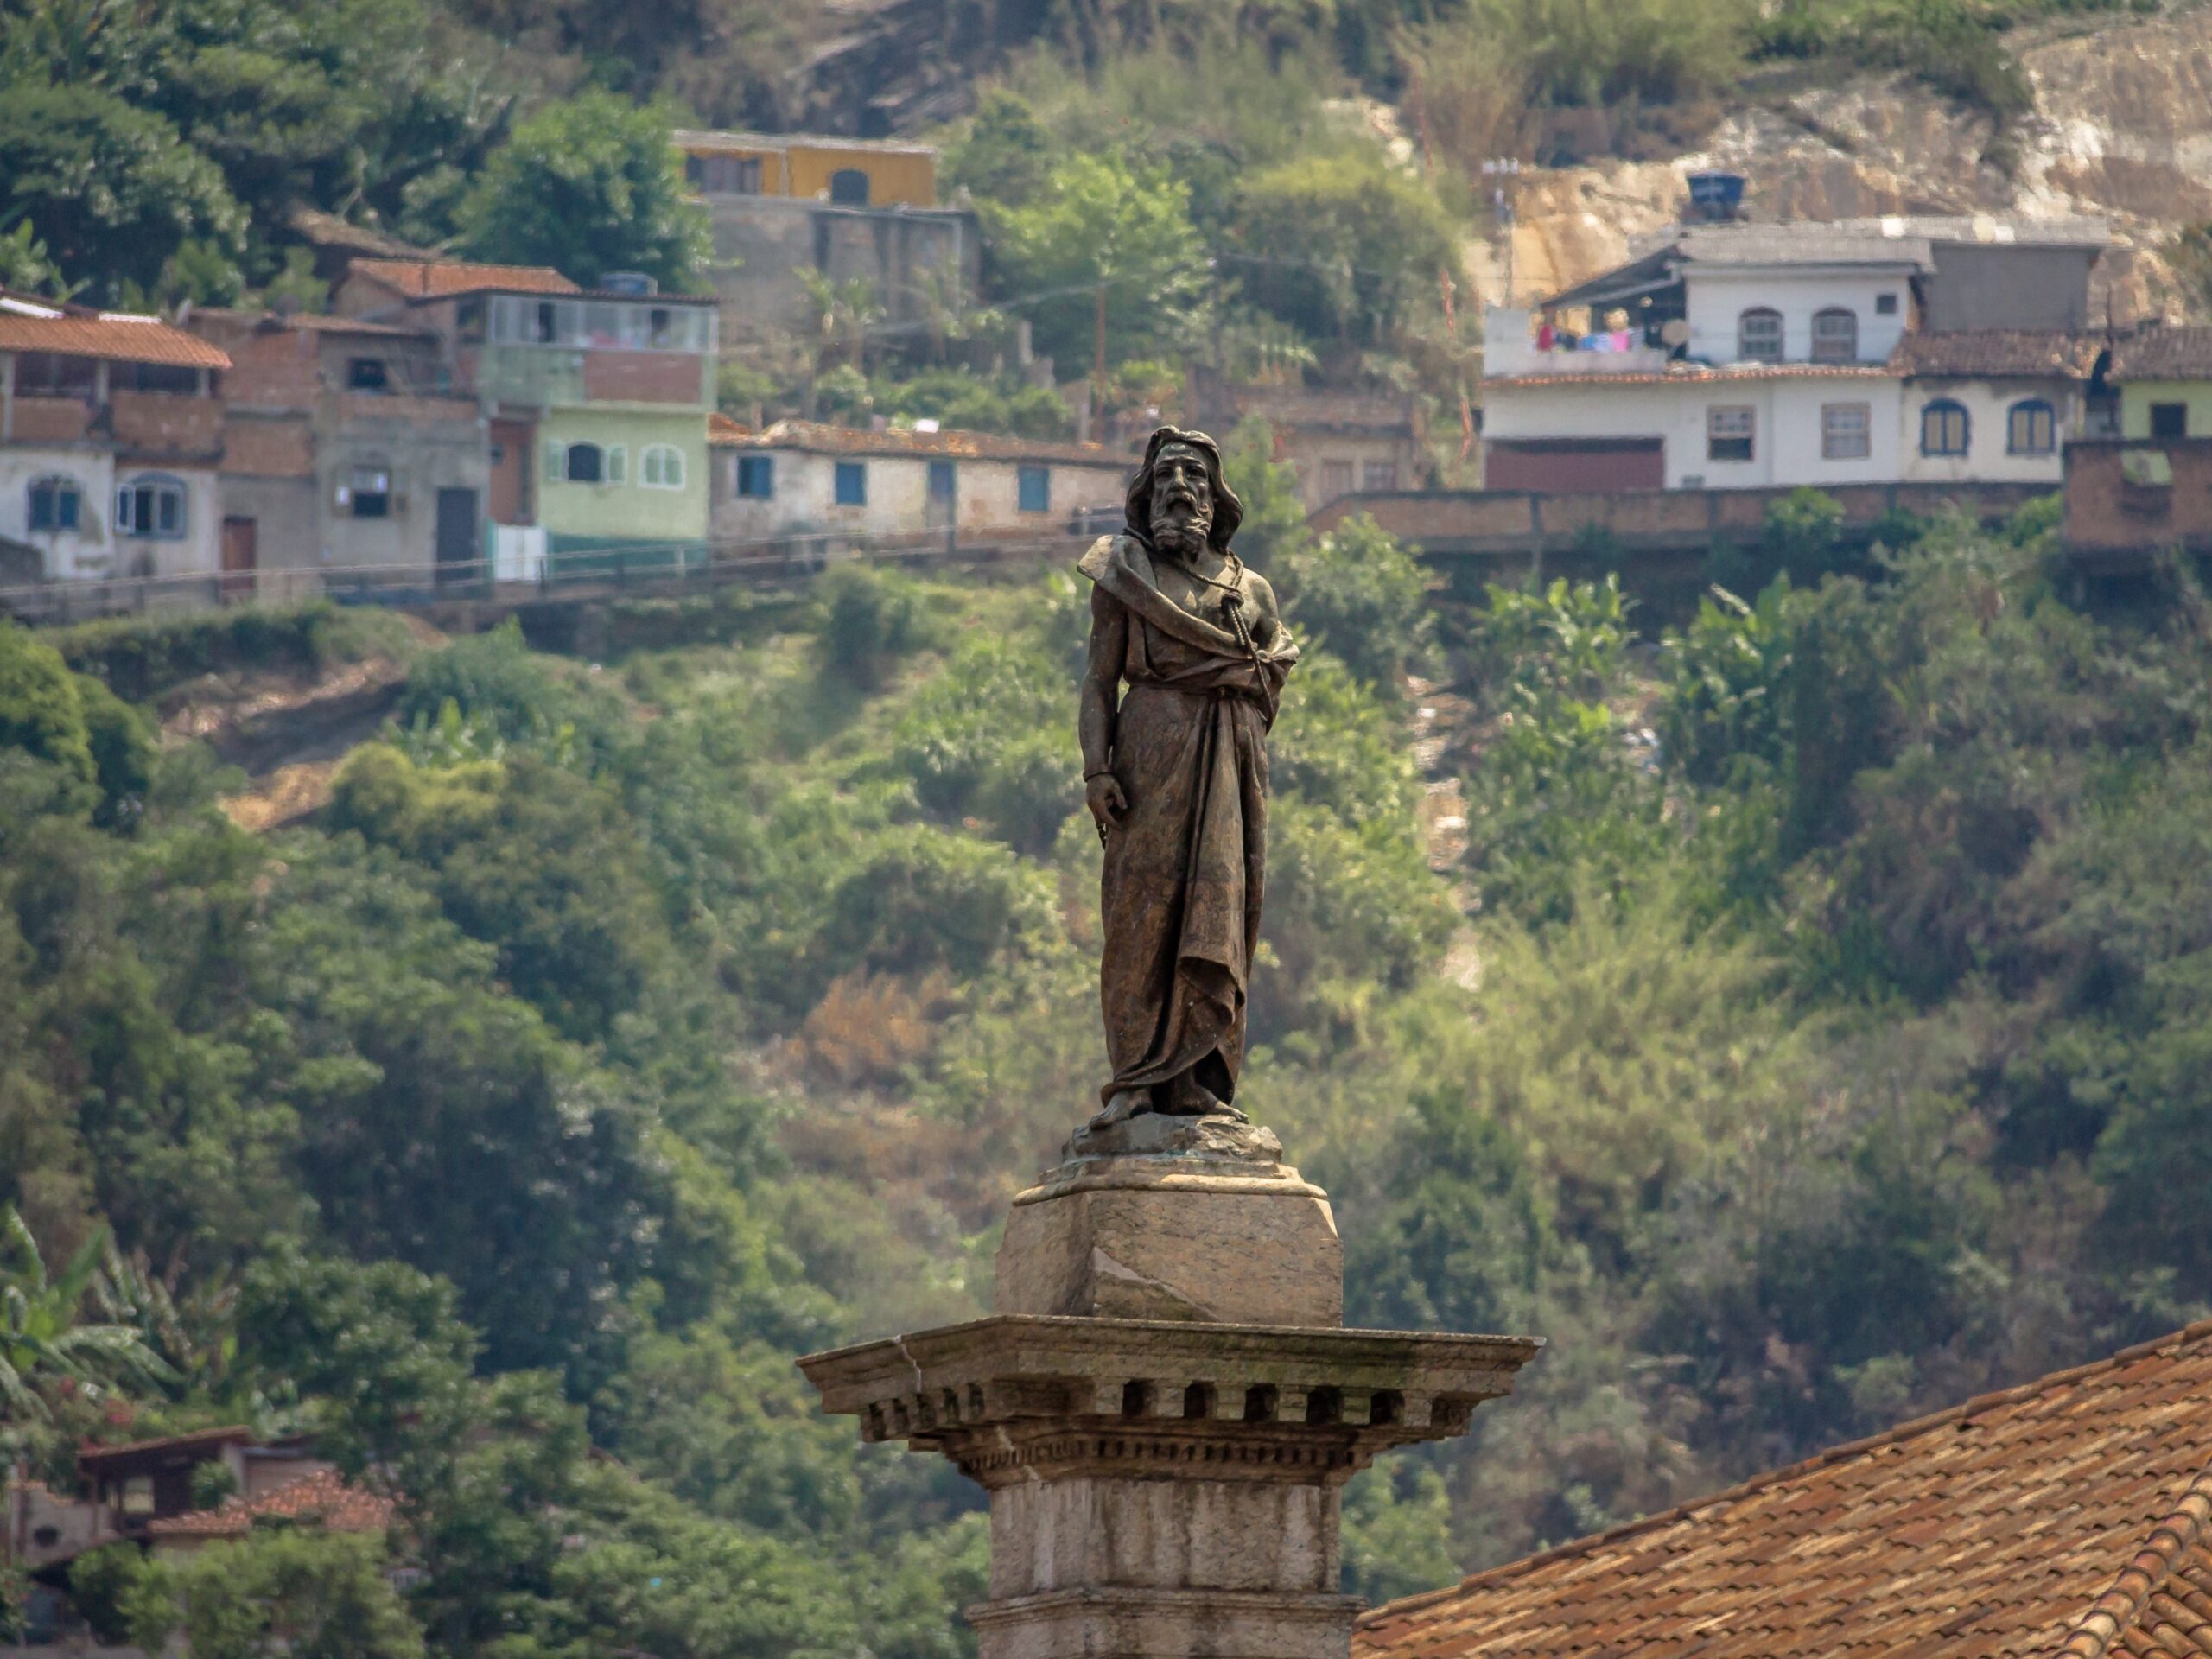 Descobrindo as maravilhas próximas a Belo Horizonte: 10 lugares incríveis para visitar